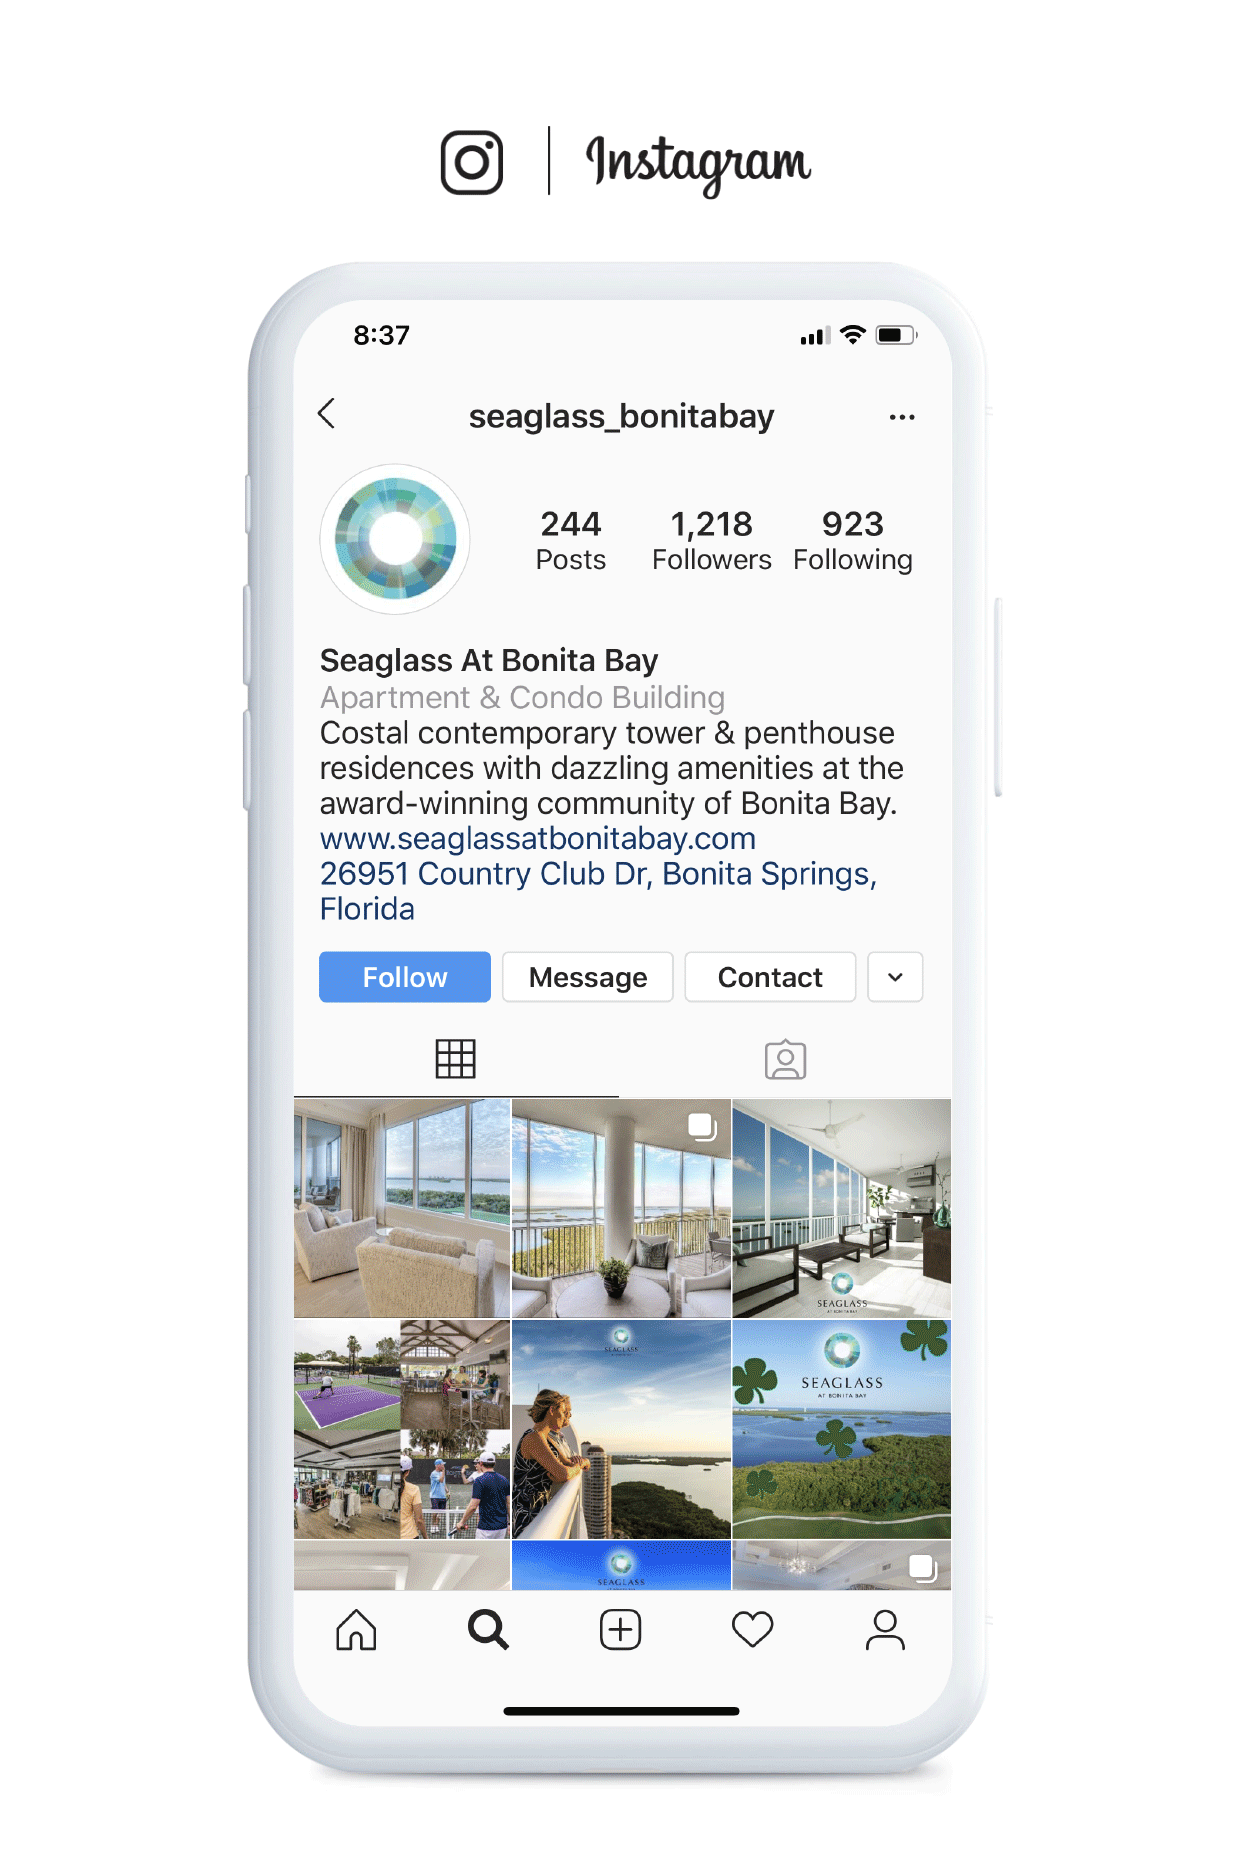 Seaglass Bonita Bay - Instagram Social Media Marketing